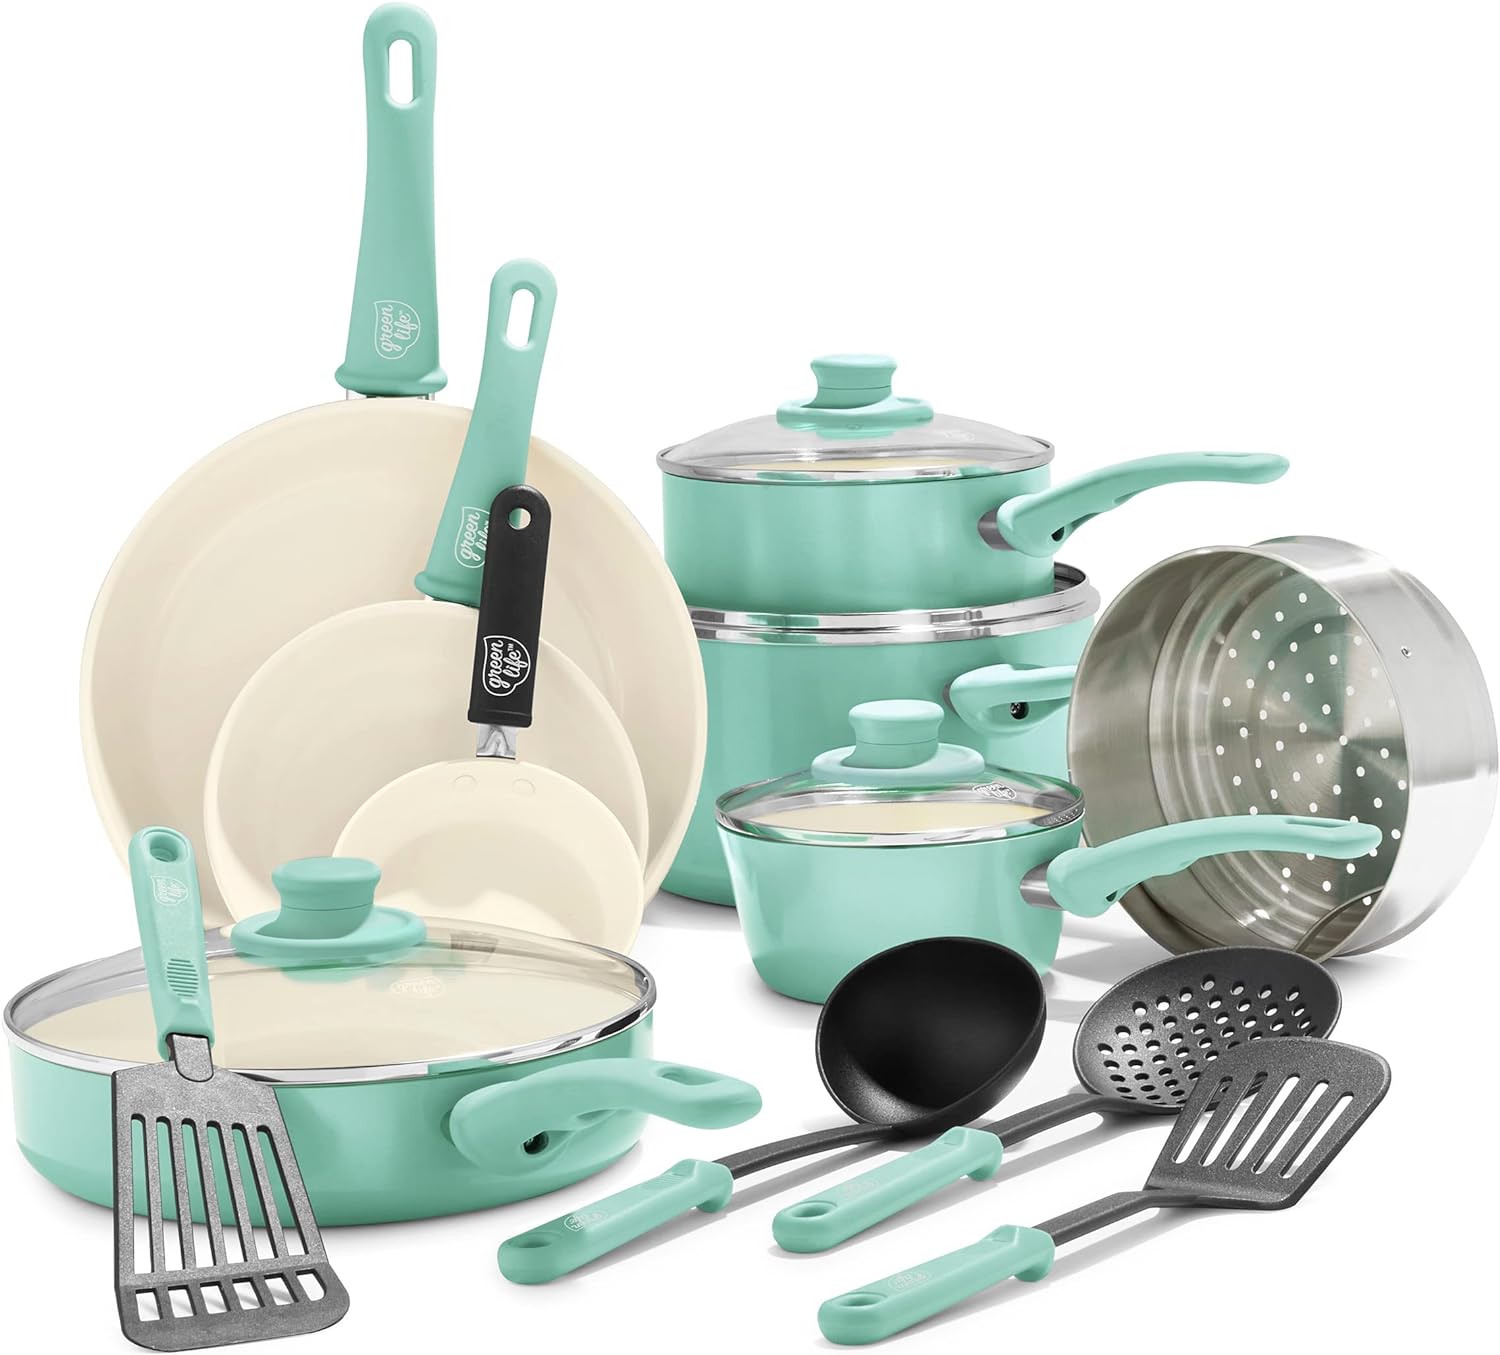  GreenLife Ceramic Nonstick, Cookware Sets 